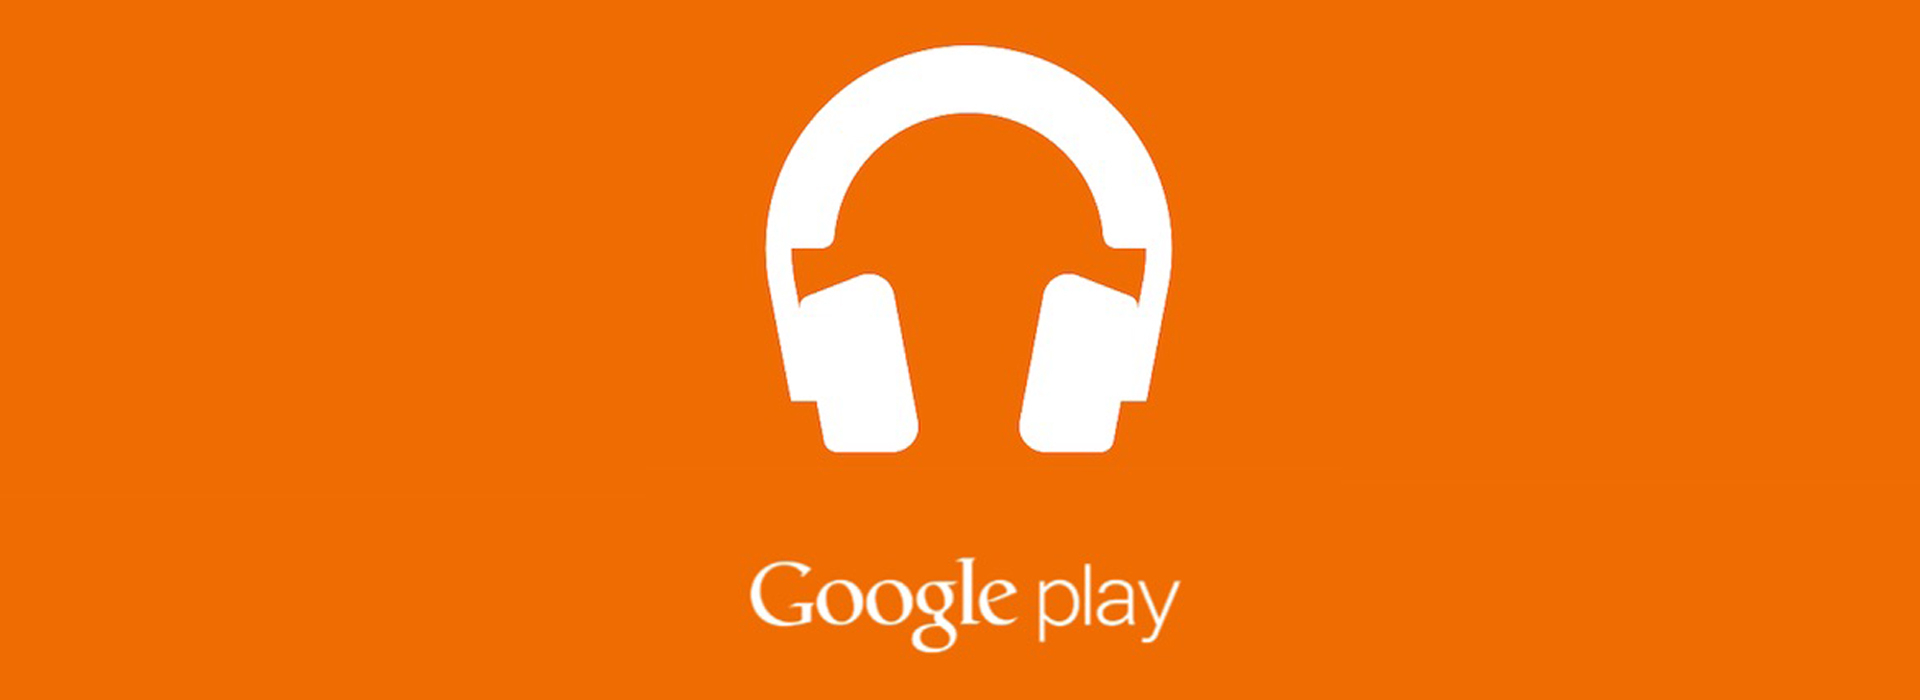 Google-Play-UB